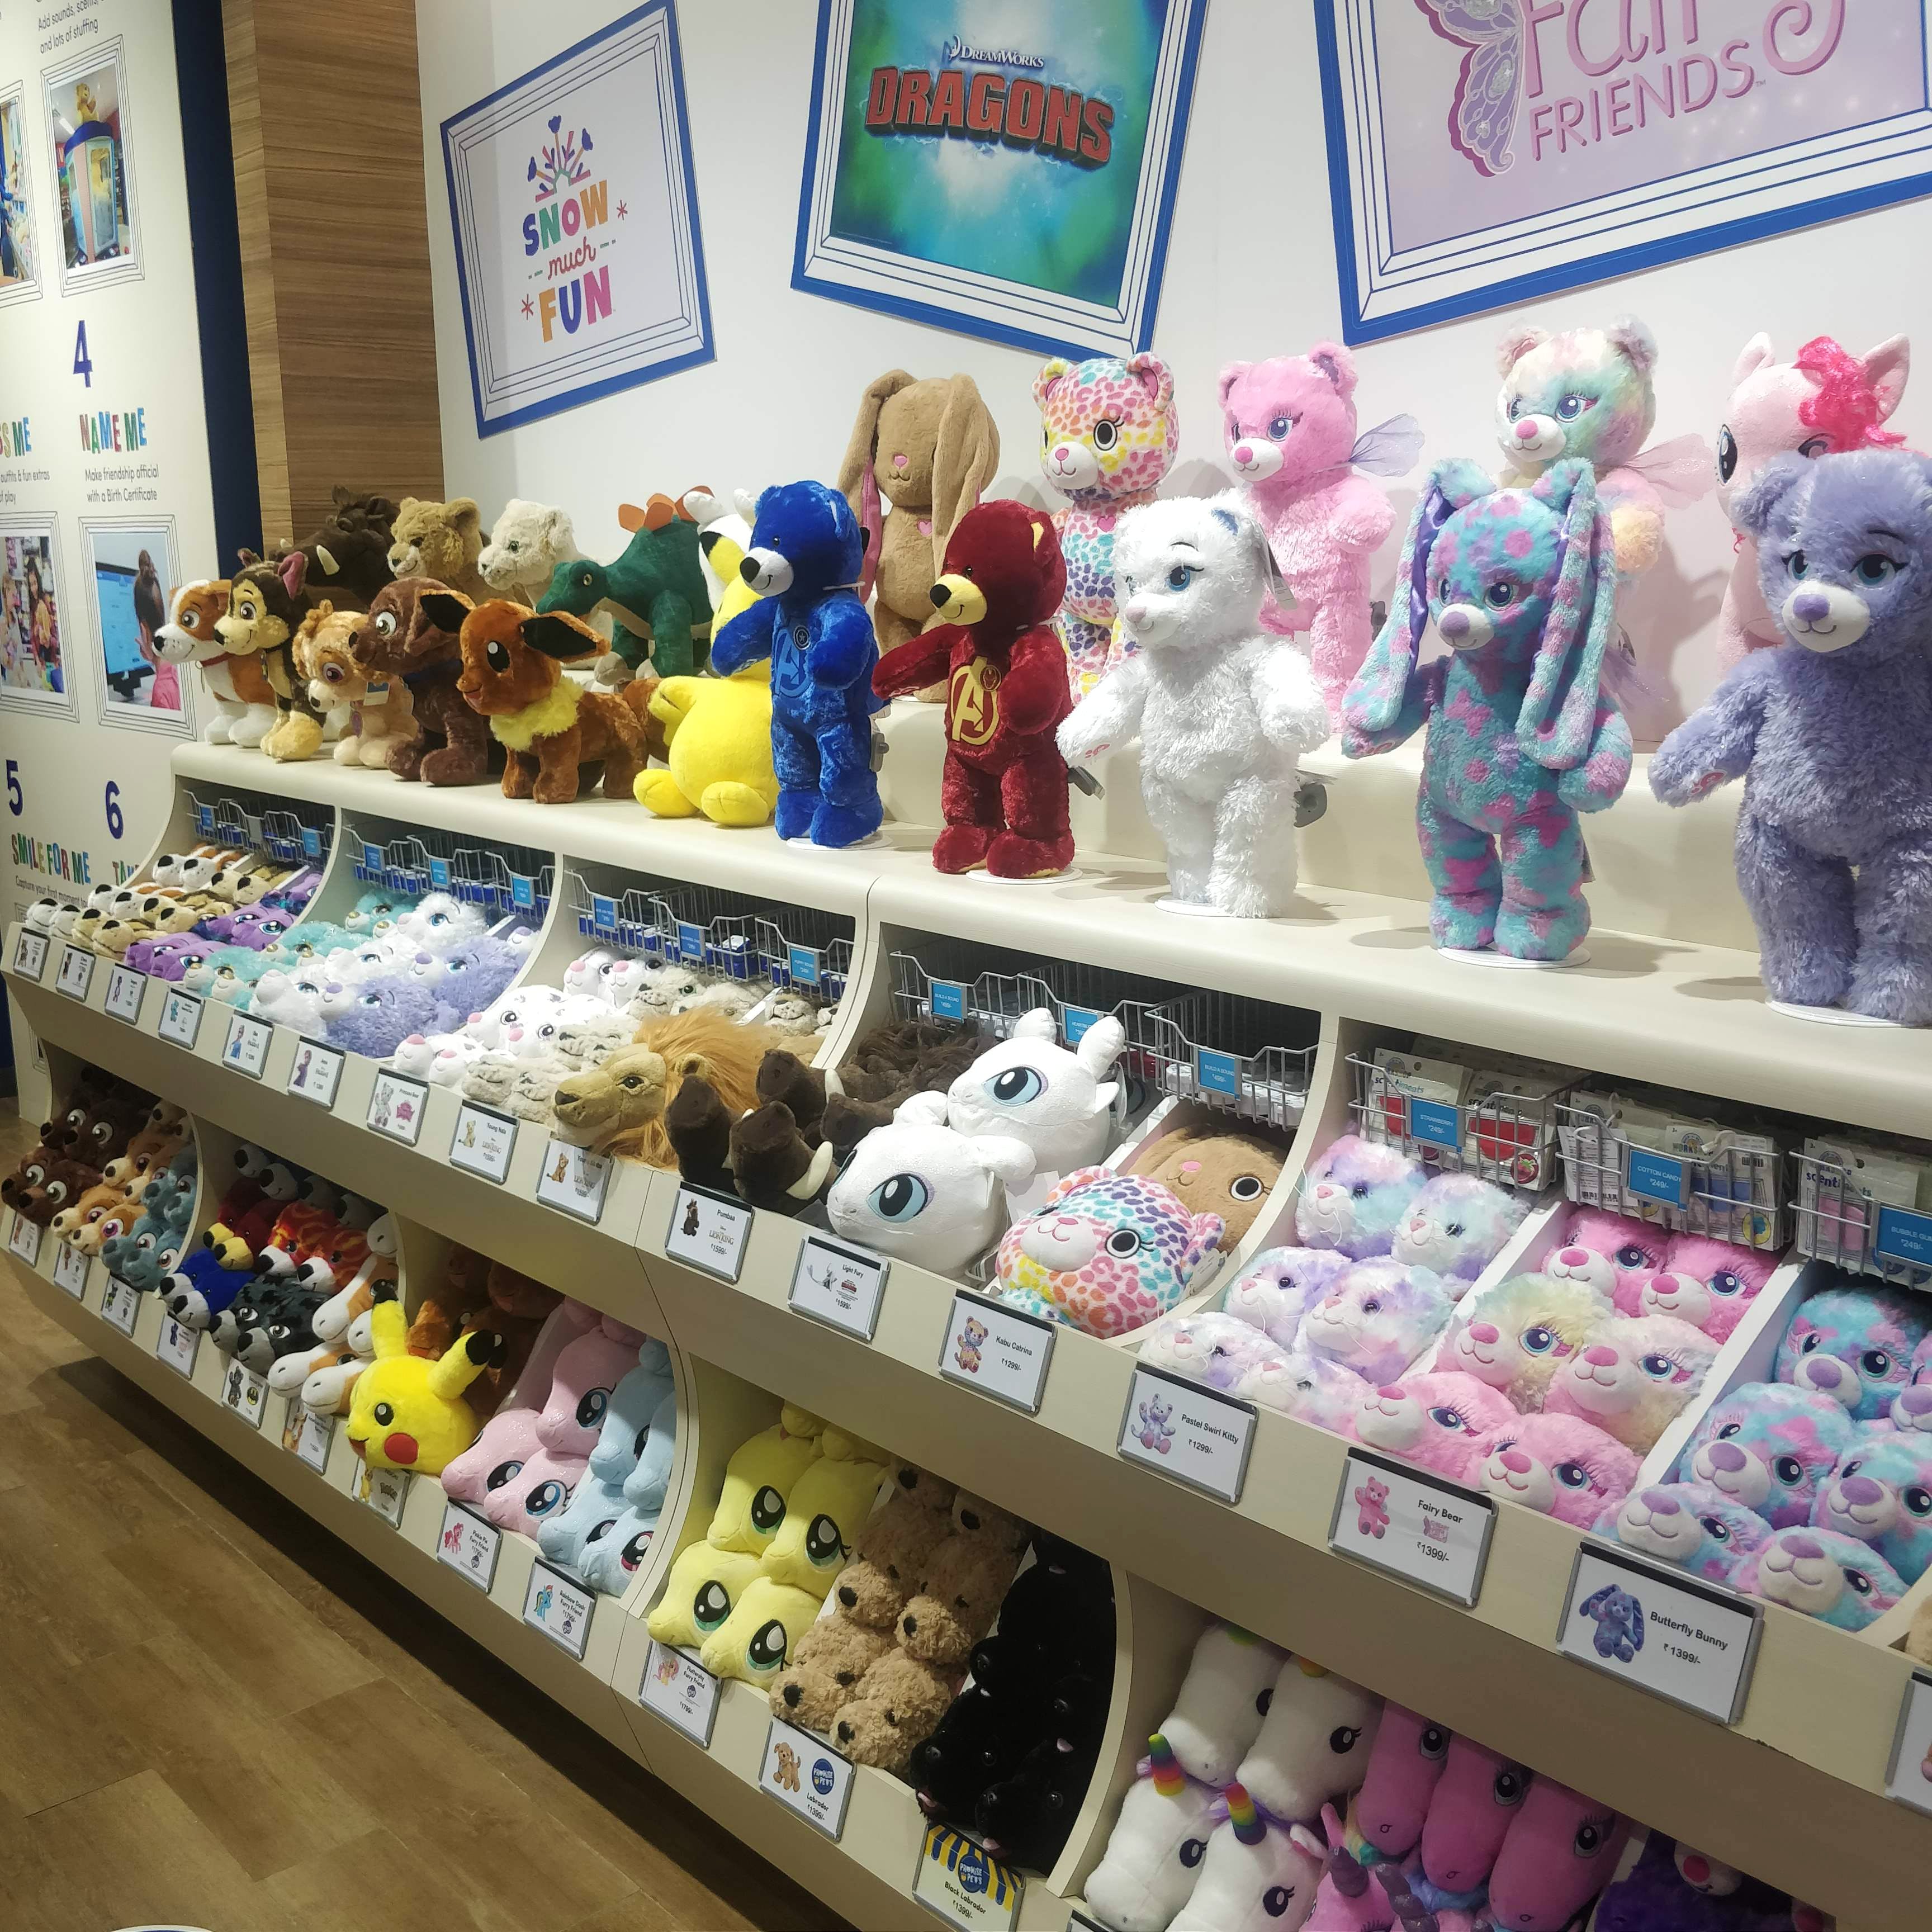 Toy,Shelf,Stuffed toy,Teddy bear,Collection,Souvenir,Stationery